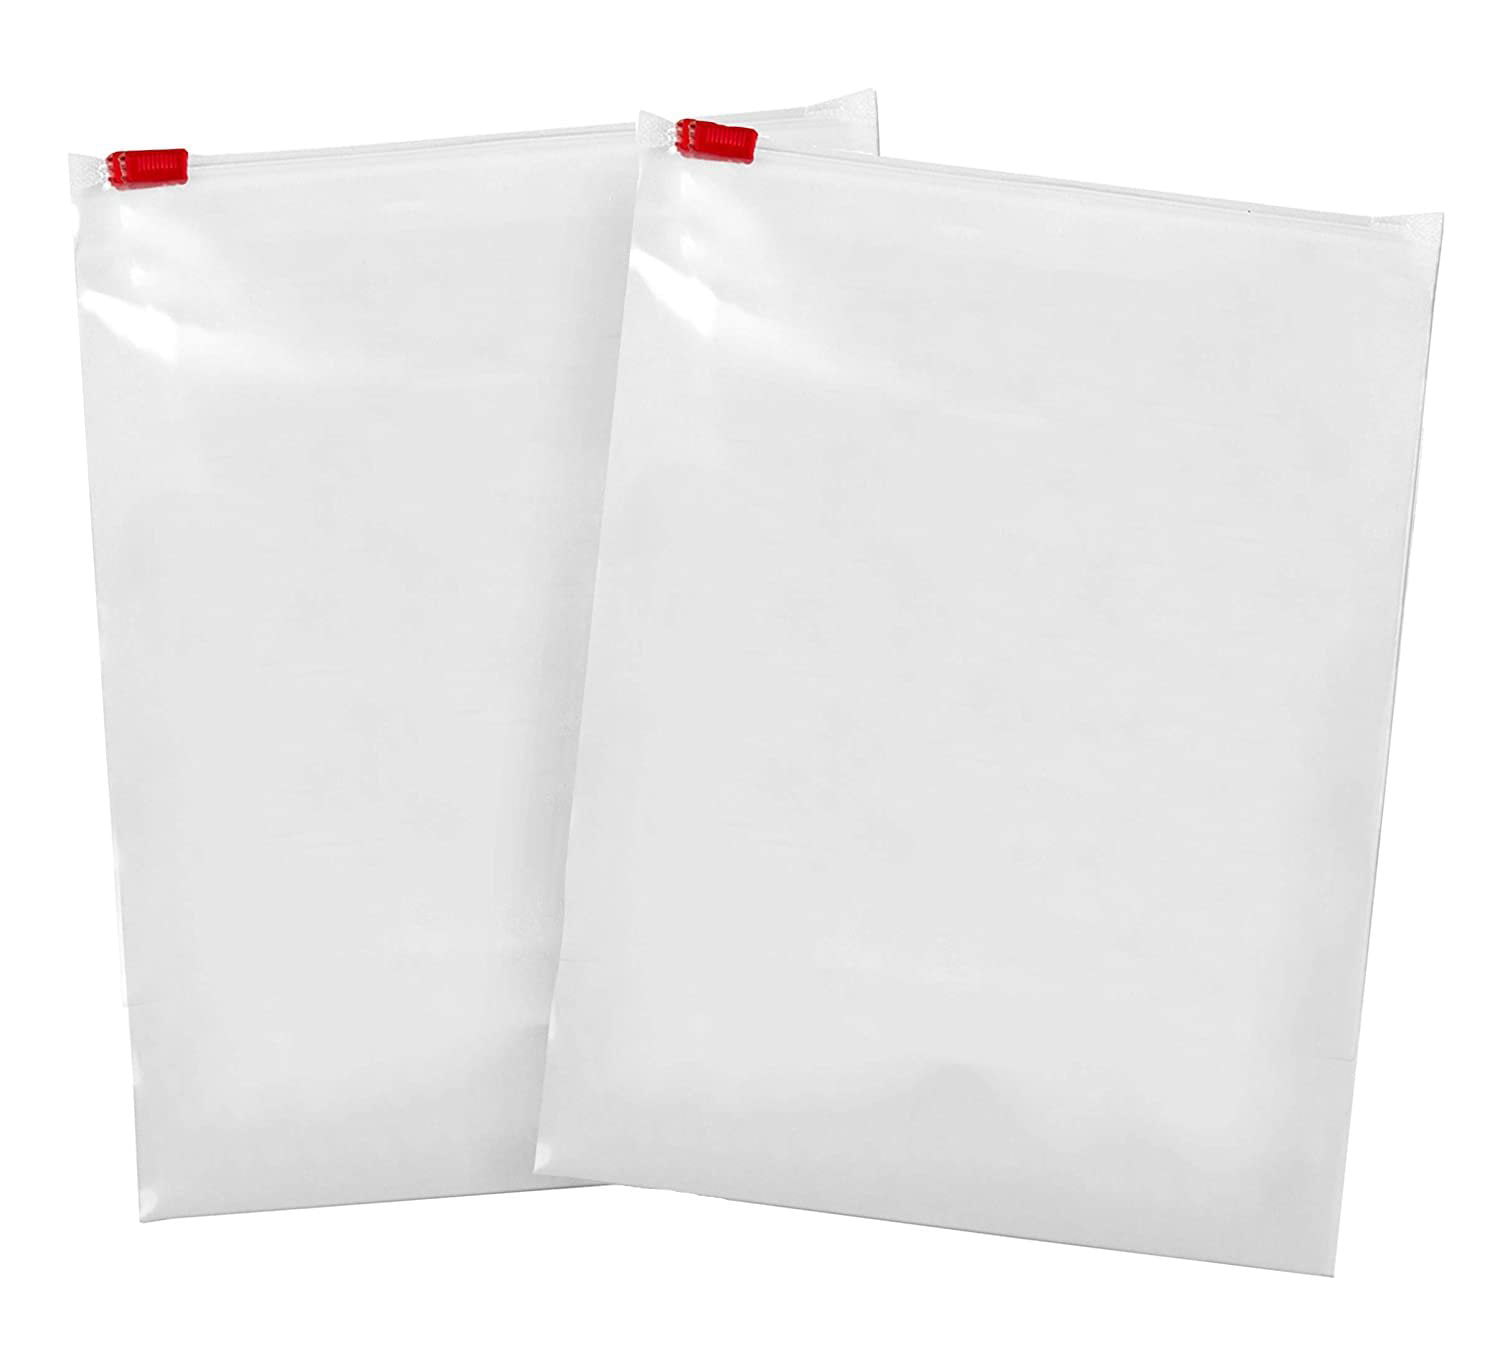 9 x 12 clear plastic bags